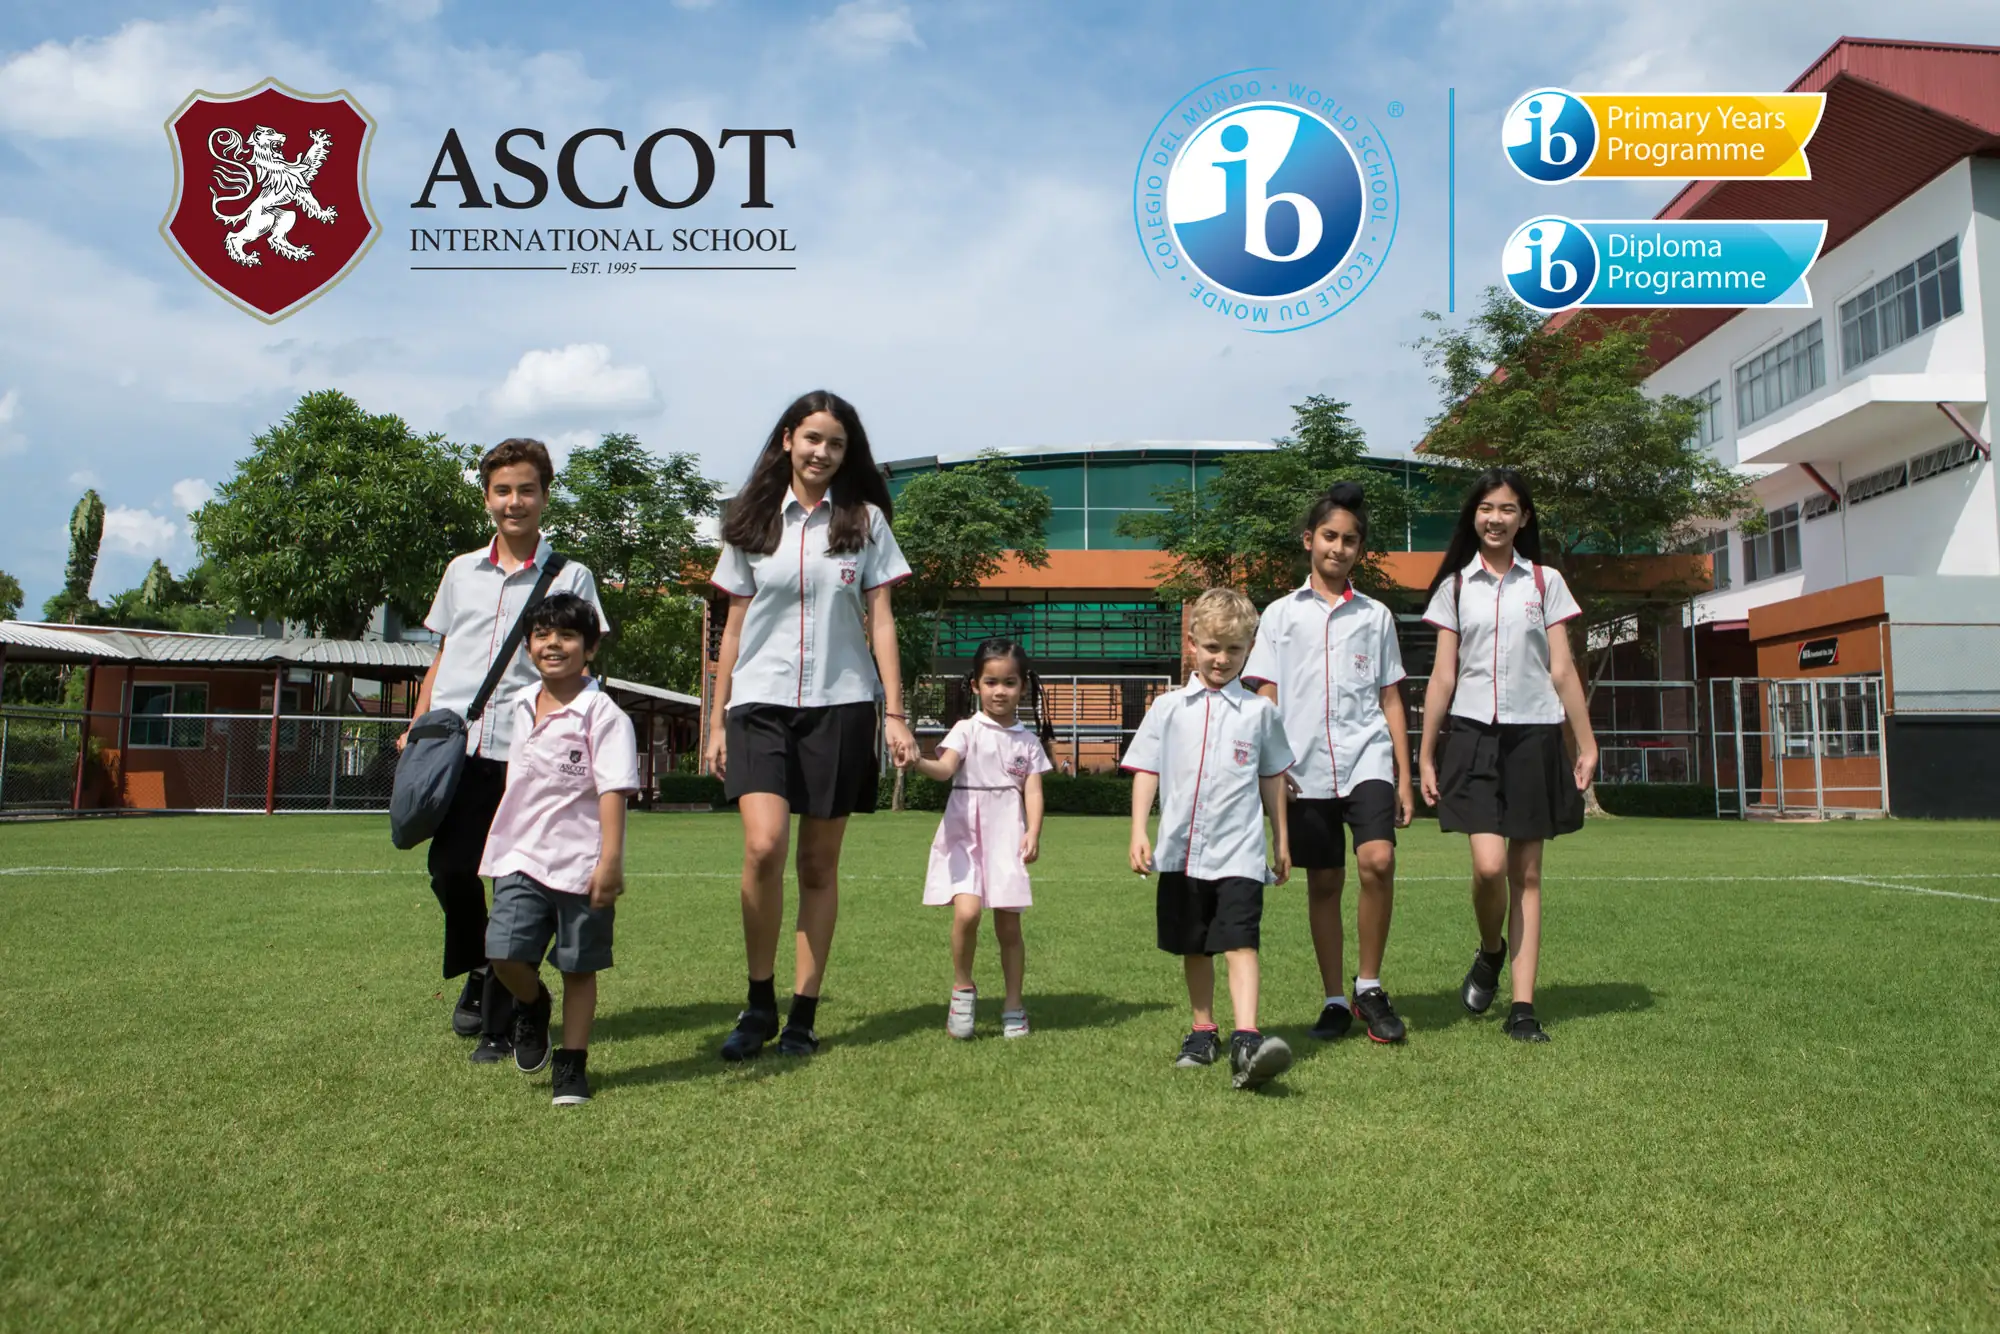 Ascot International School